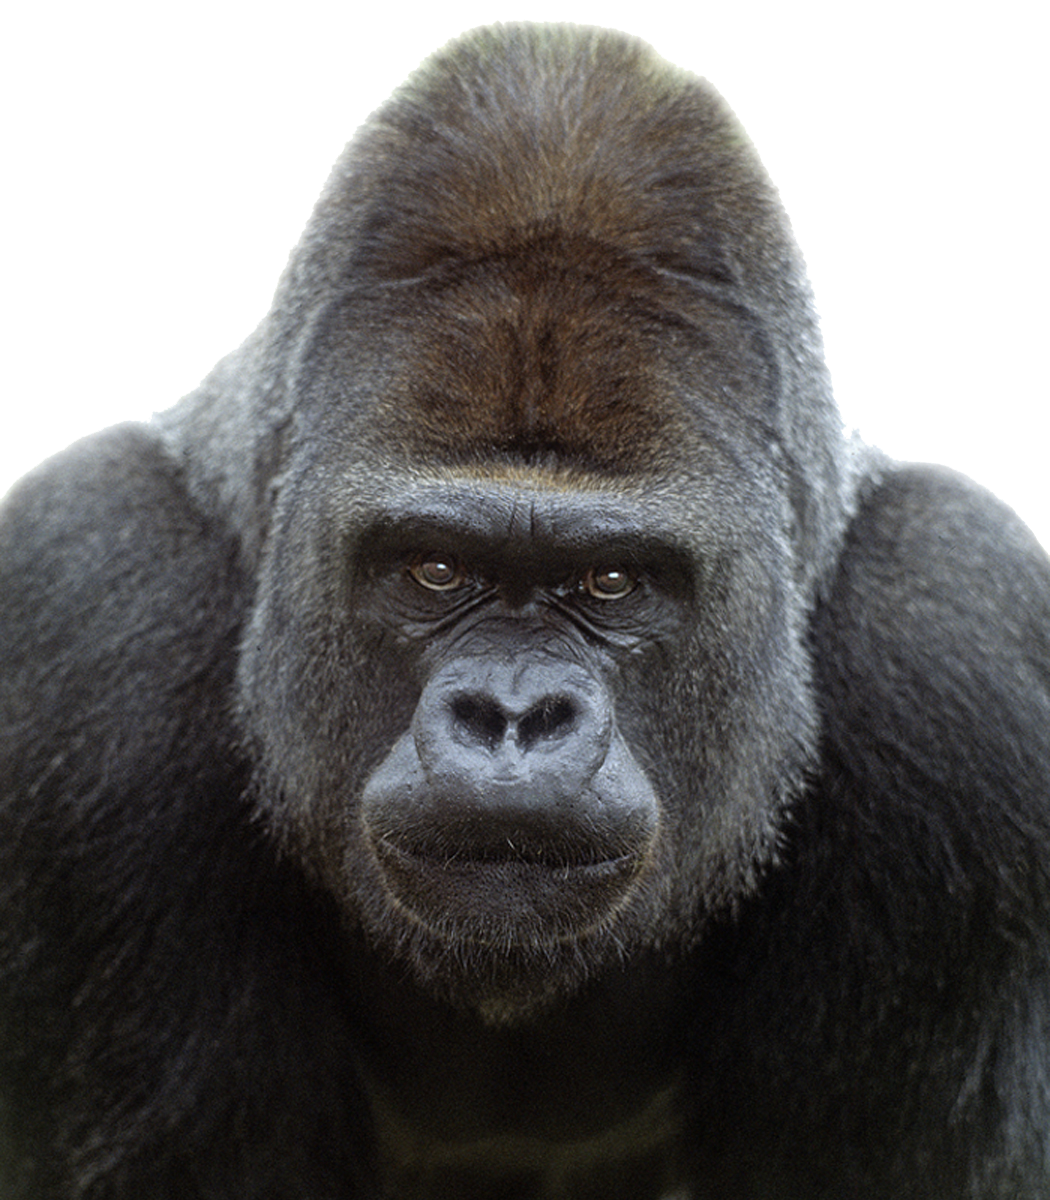 ndroid gorilla image